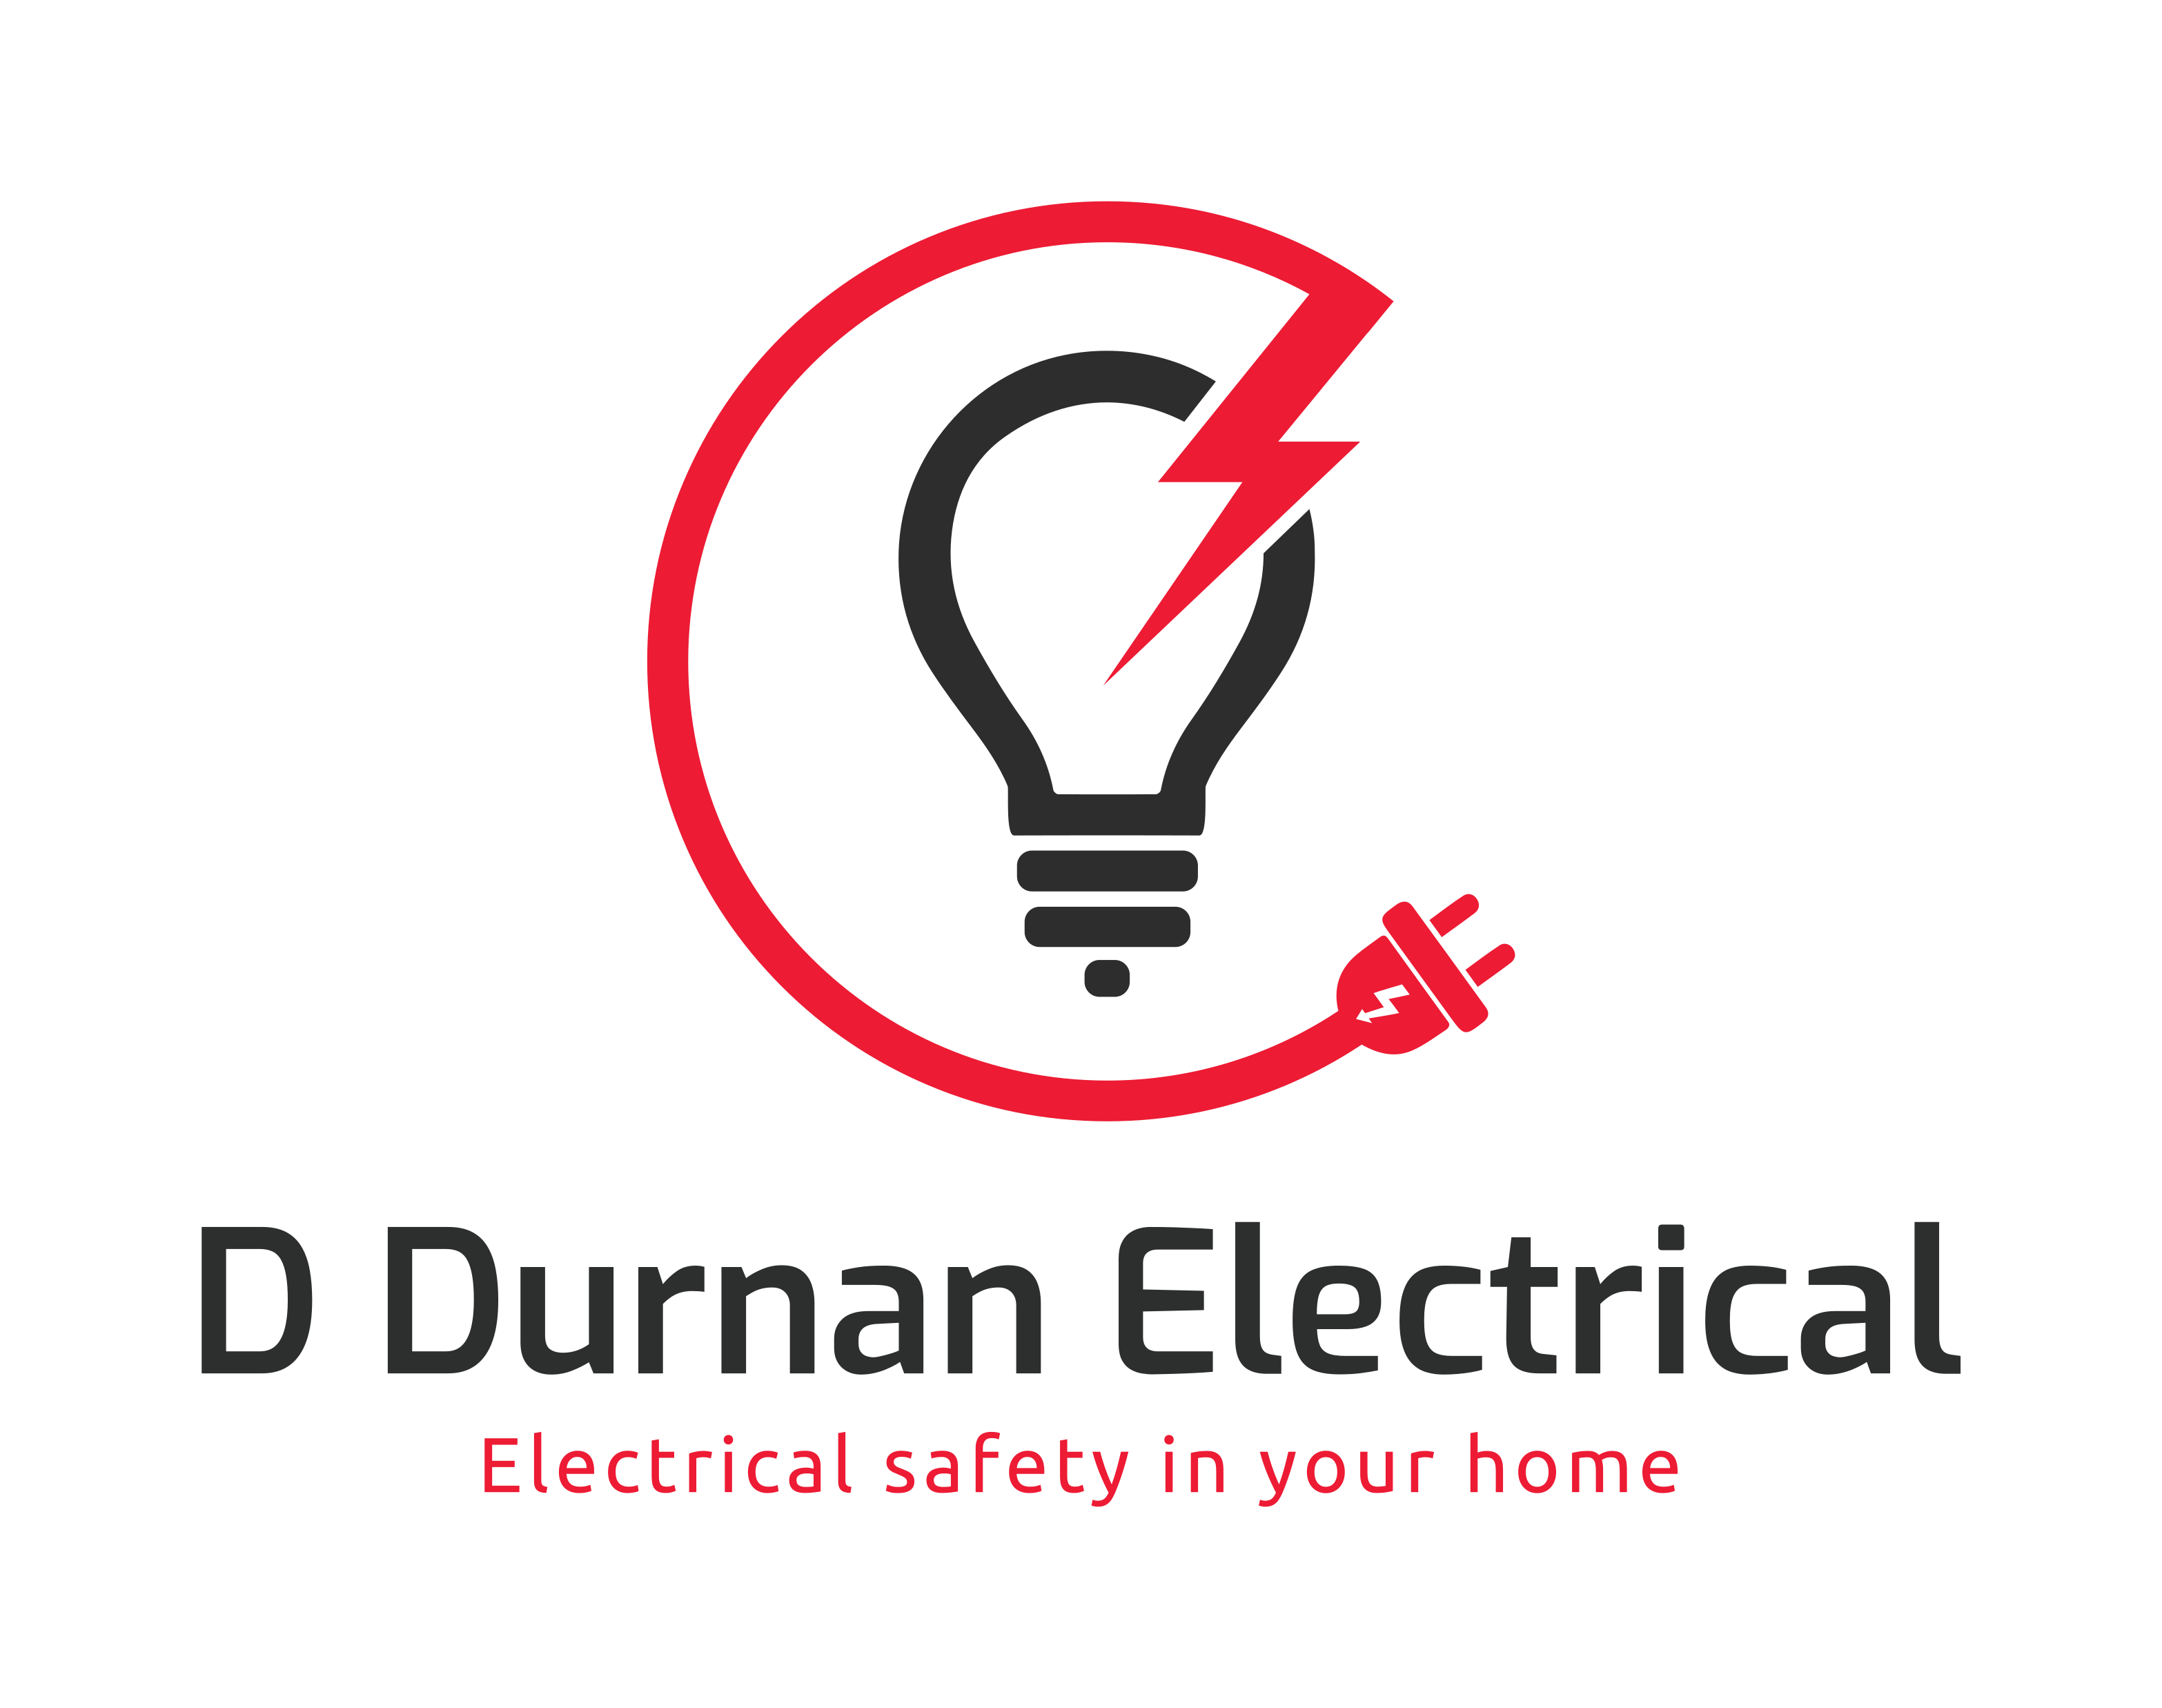 D Durnan Electrical